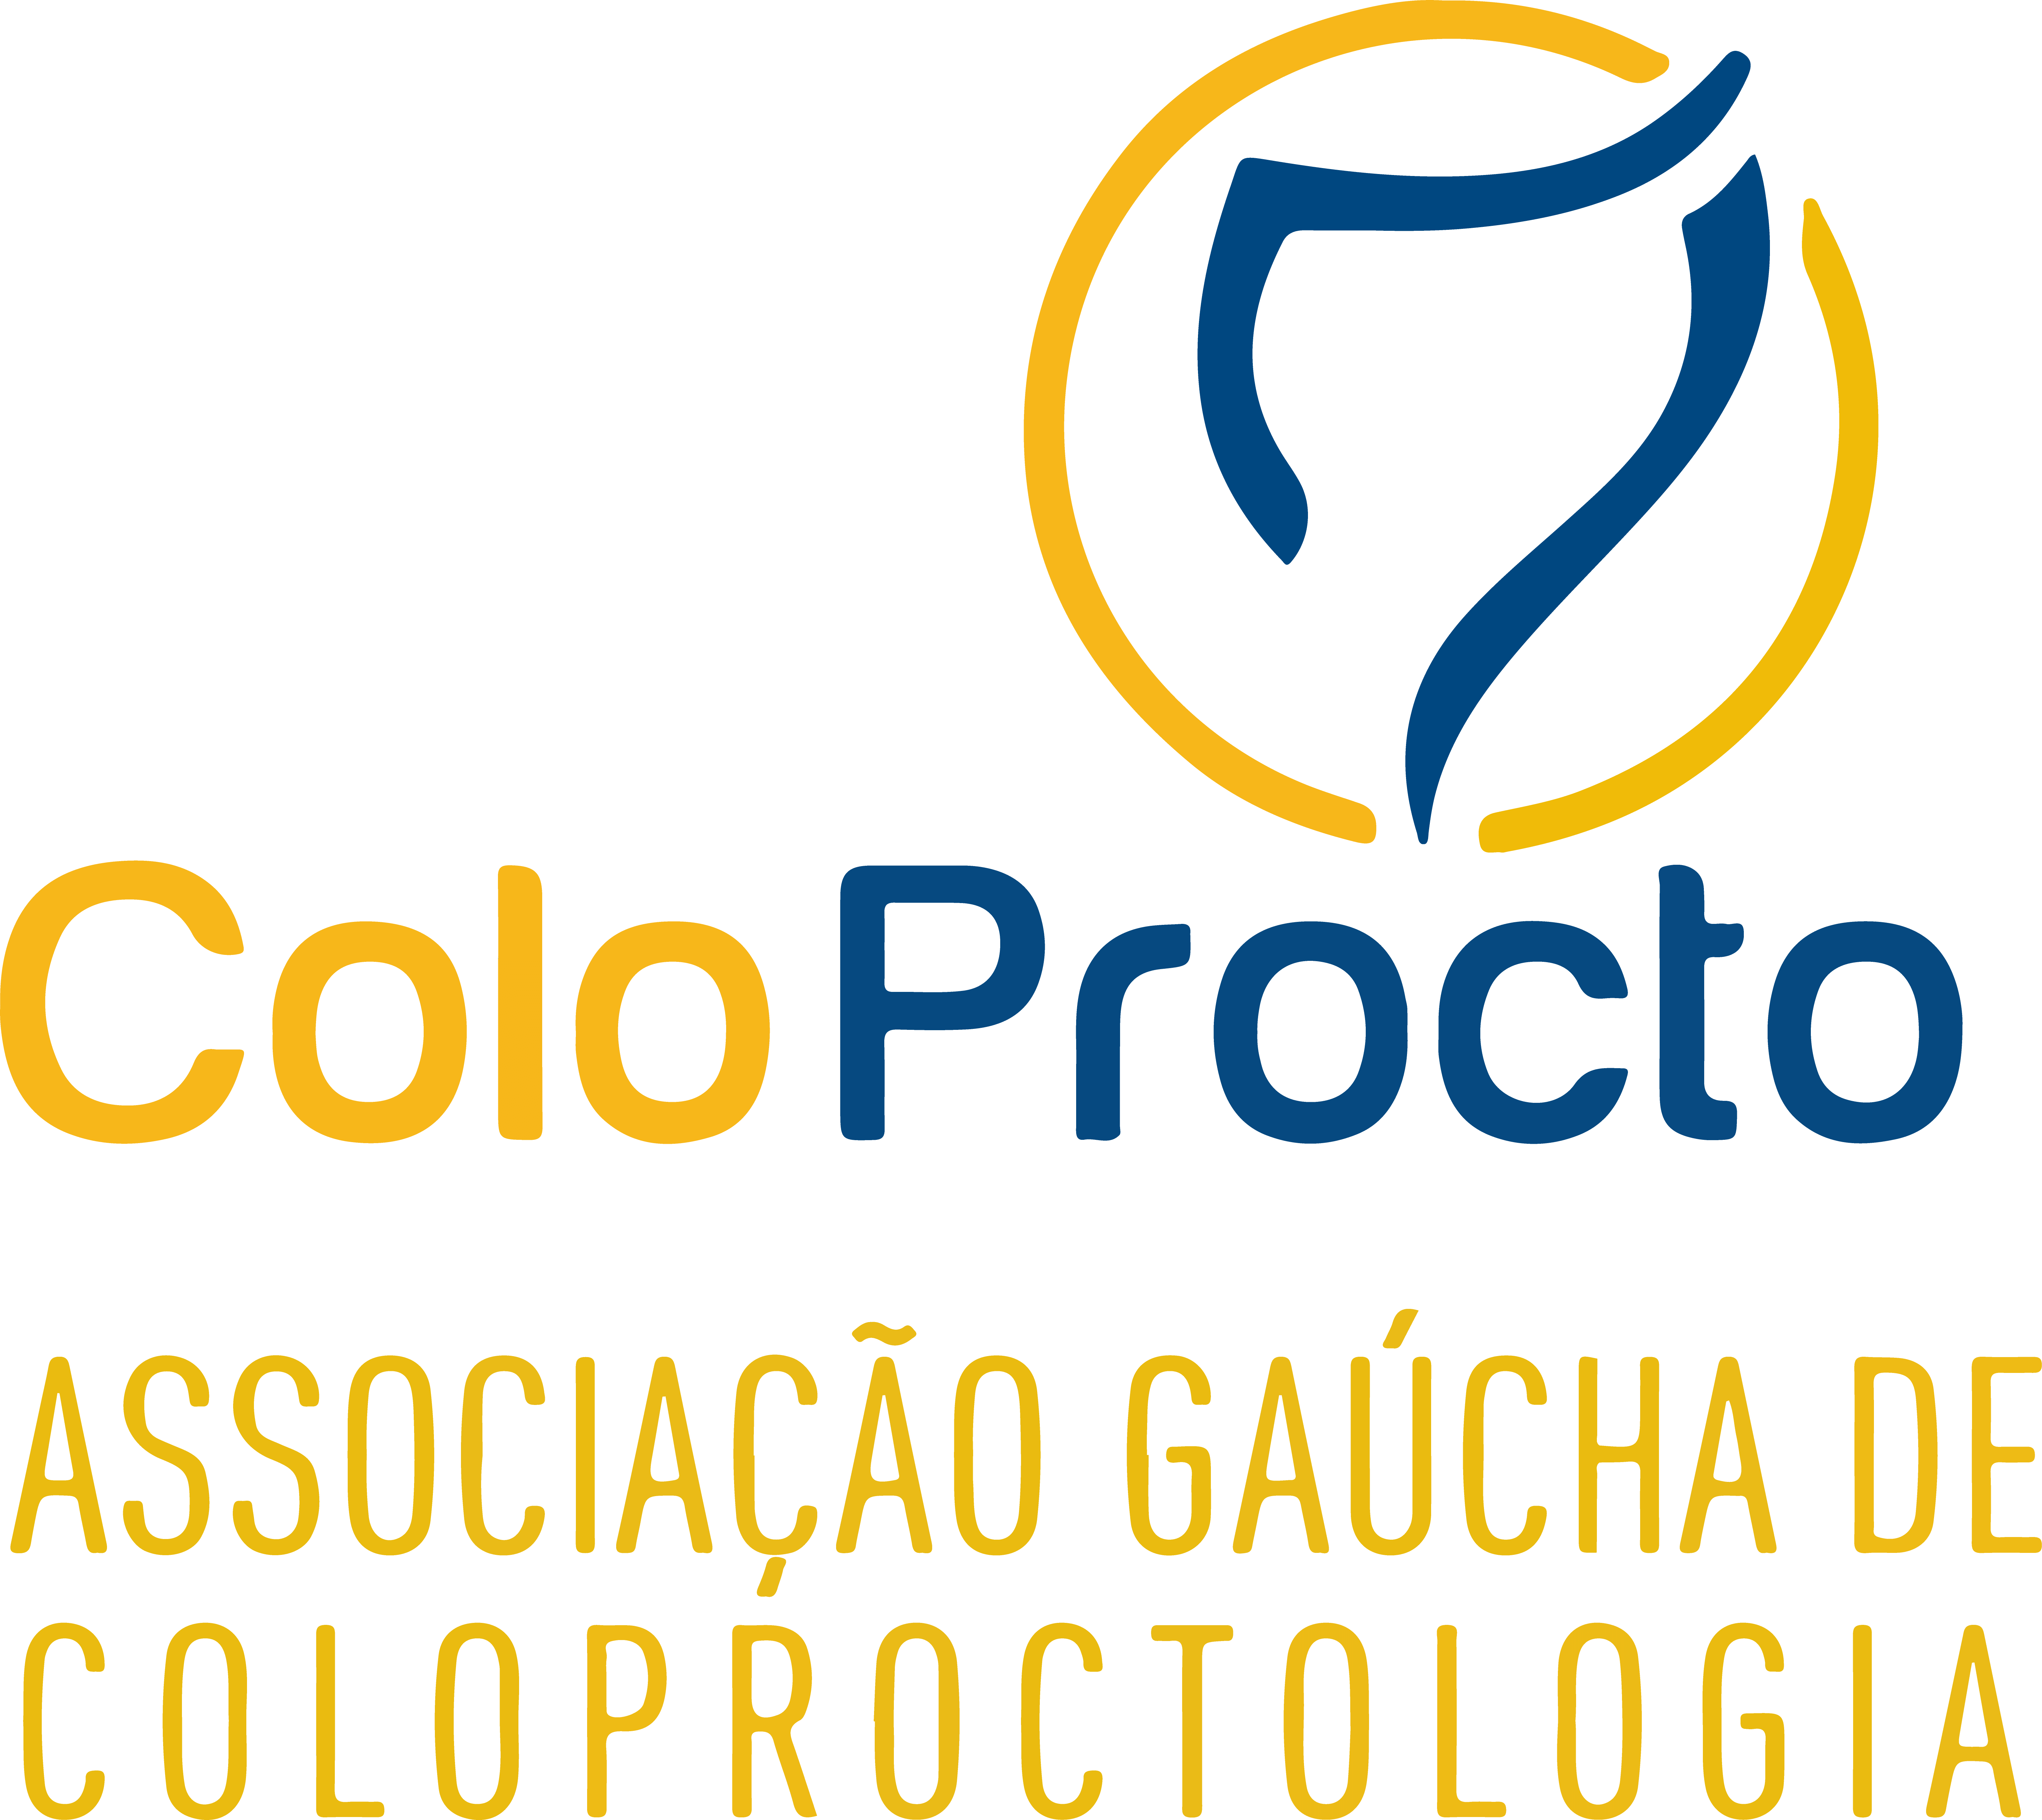 COLOPROCTOLOGIA-